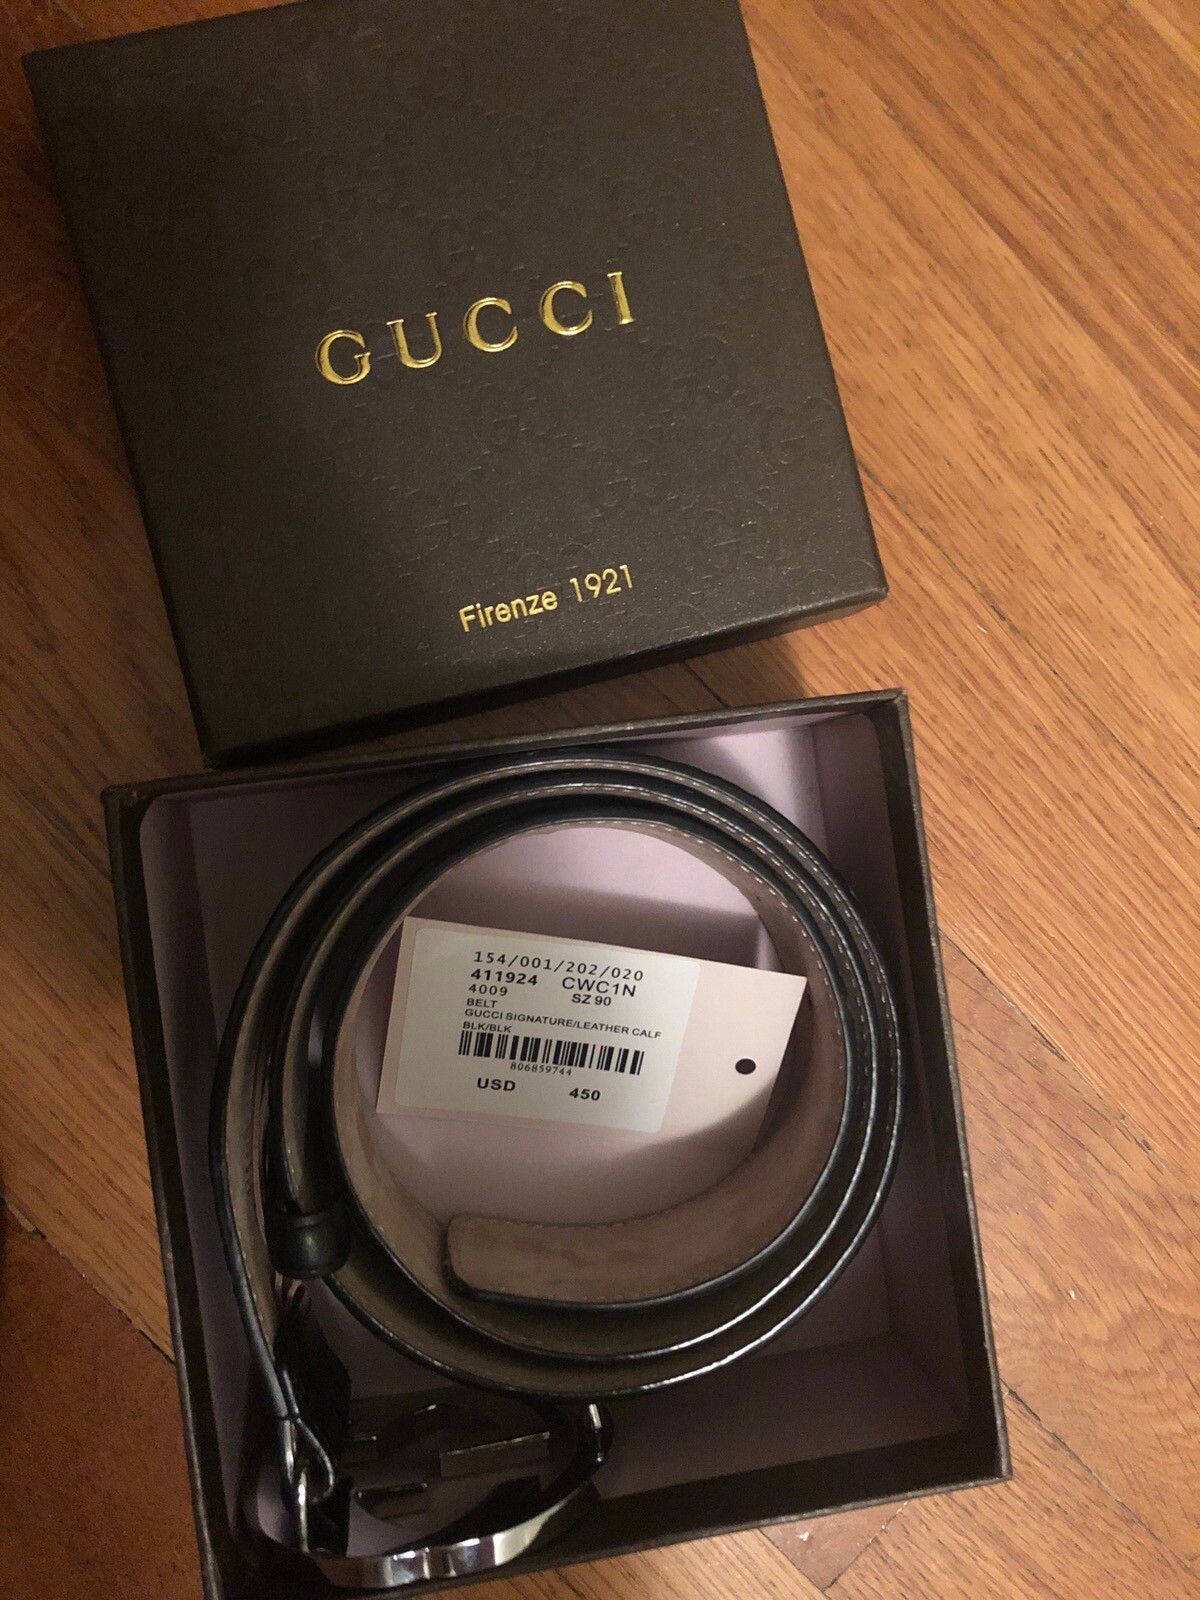 Gucci Gucci Signature Leather Belt Size 36 - 1 Preview